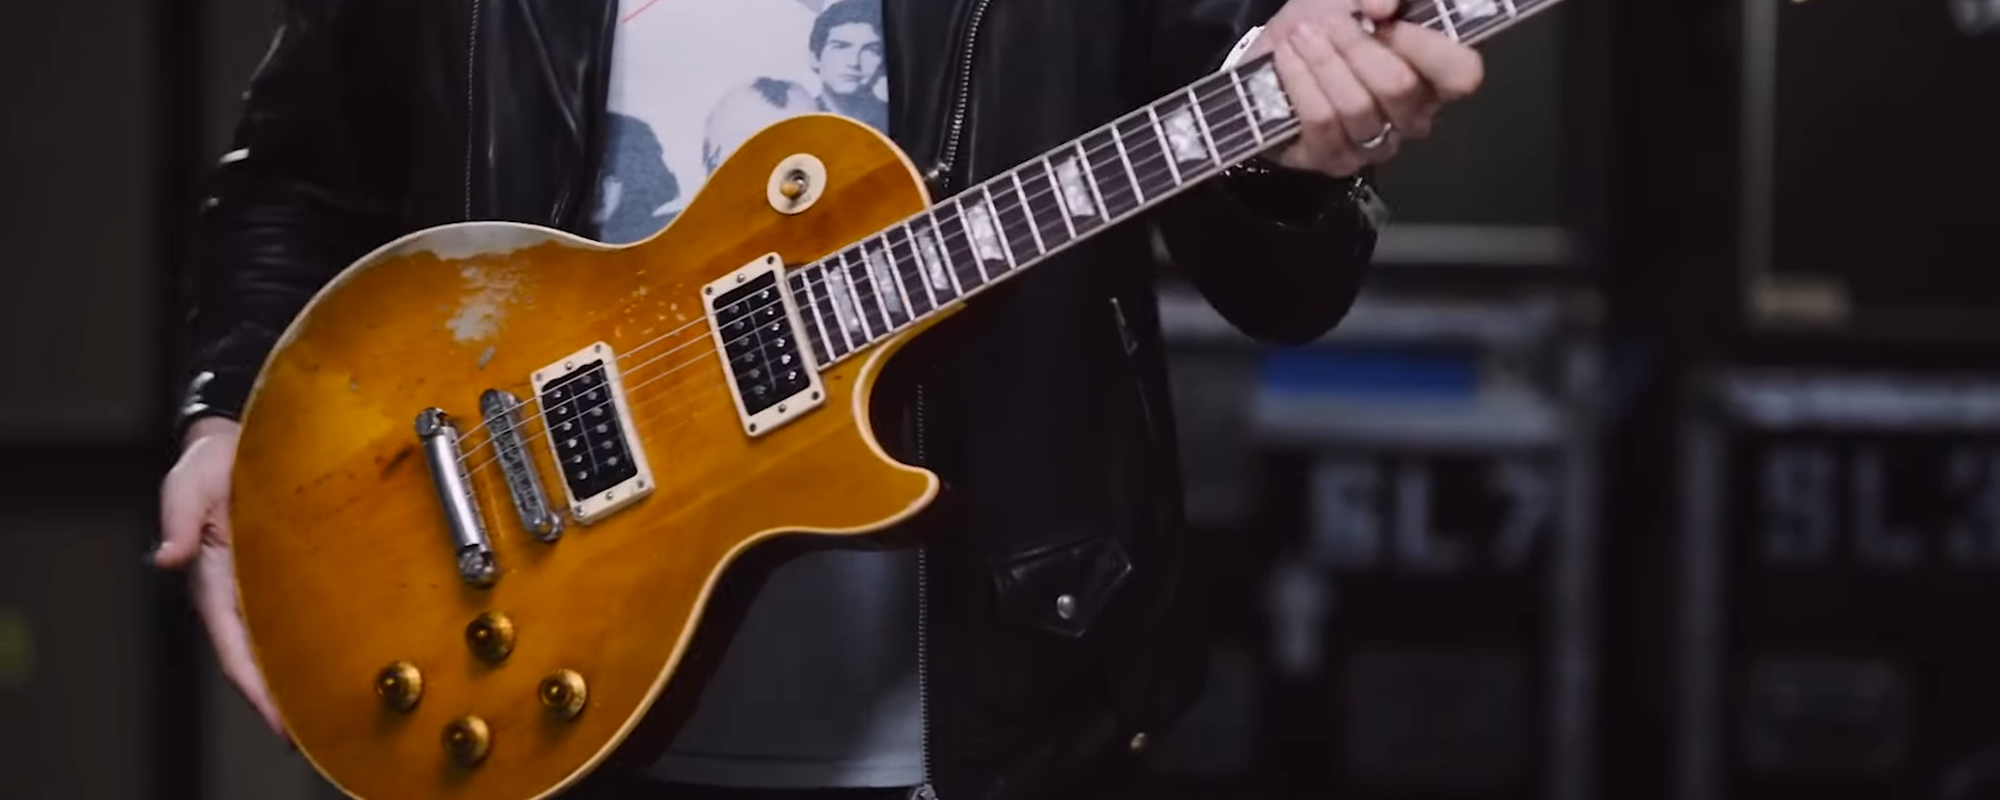 Slash’s Les Paul Guitar ‘Jessica’ Now Available Globally